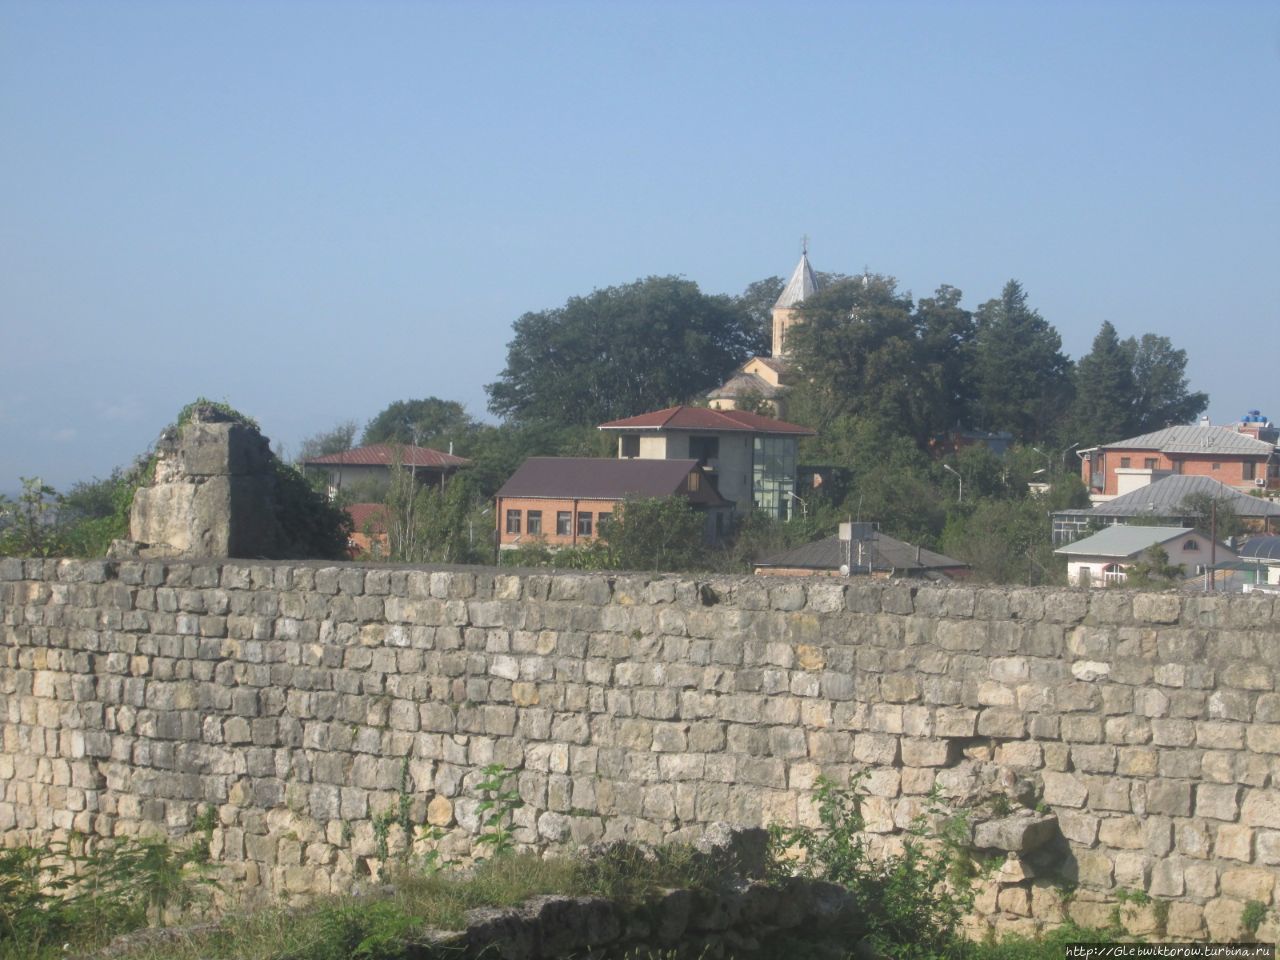 Посещение объекта ЮНЕСКО №710 — Храм Баграта Кутаиси, Грузия